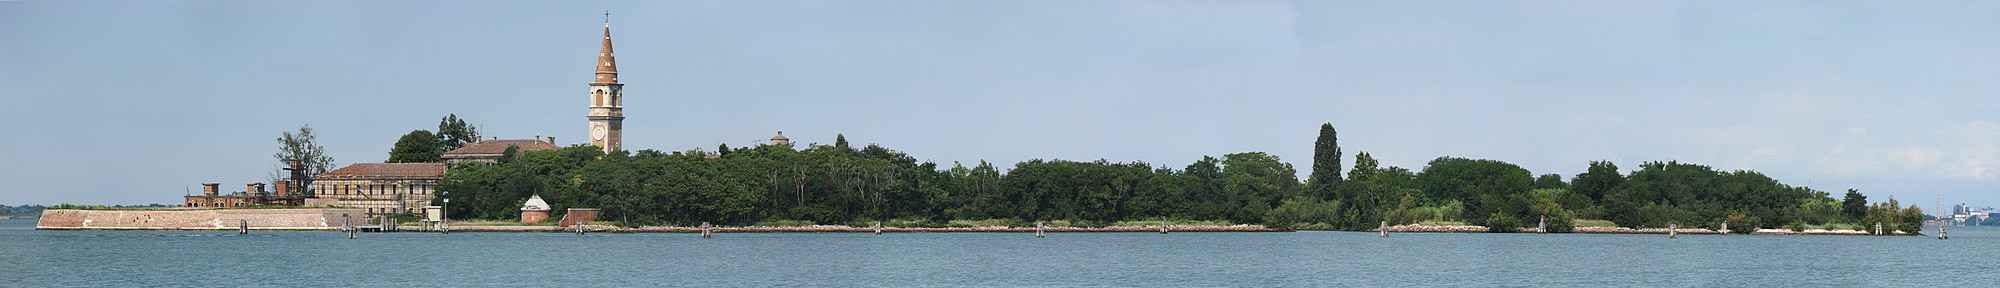 Poveglia pohledem z ostrova Lido